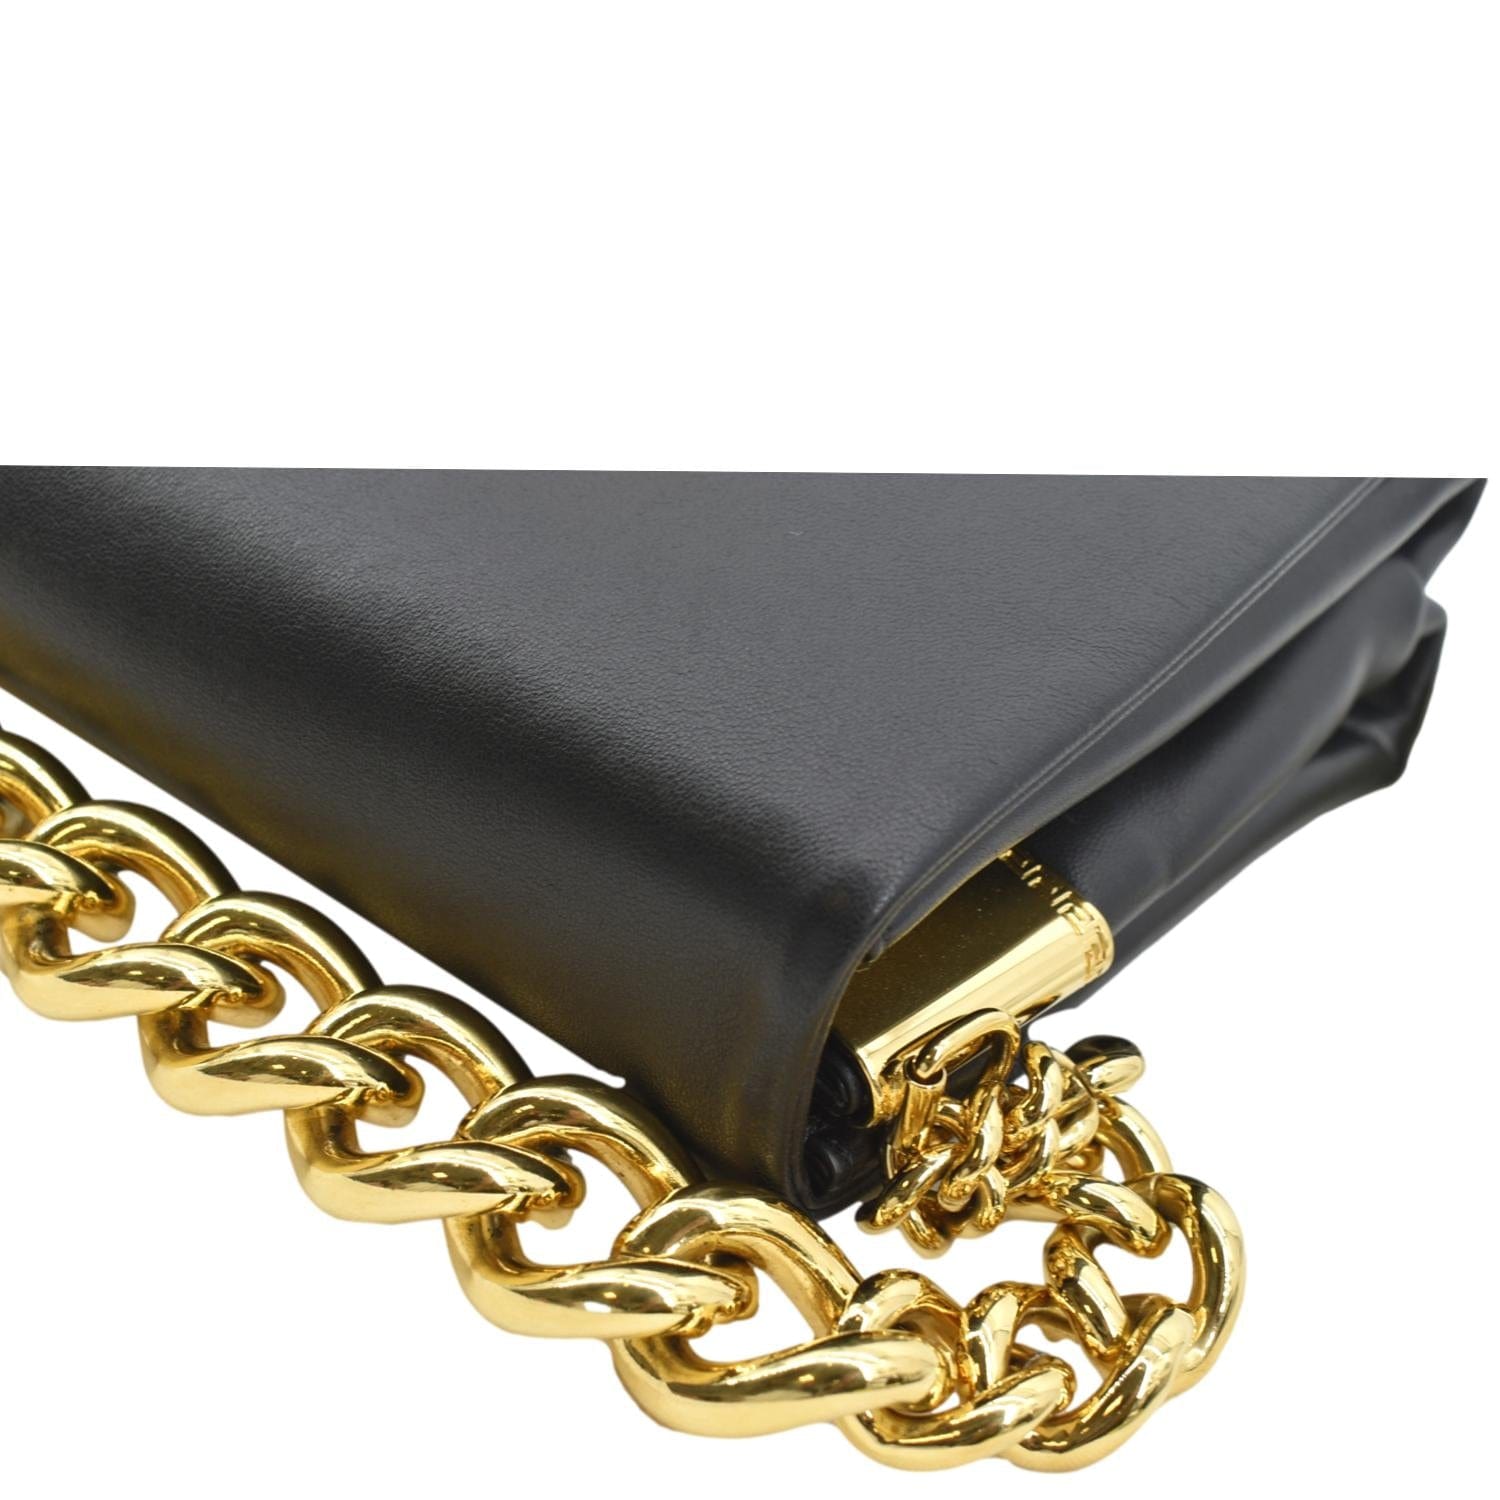 Versace Medusa Calfskin Leather Chain Clutch Bag Black